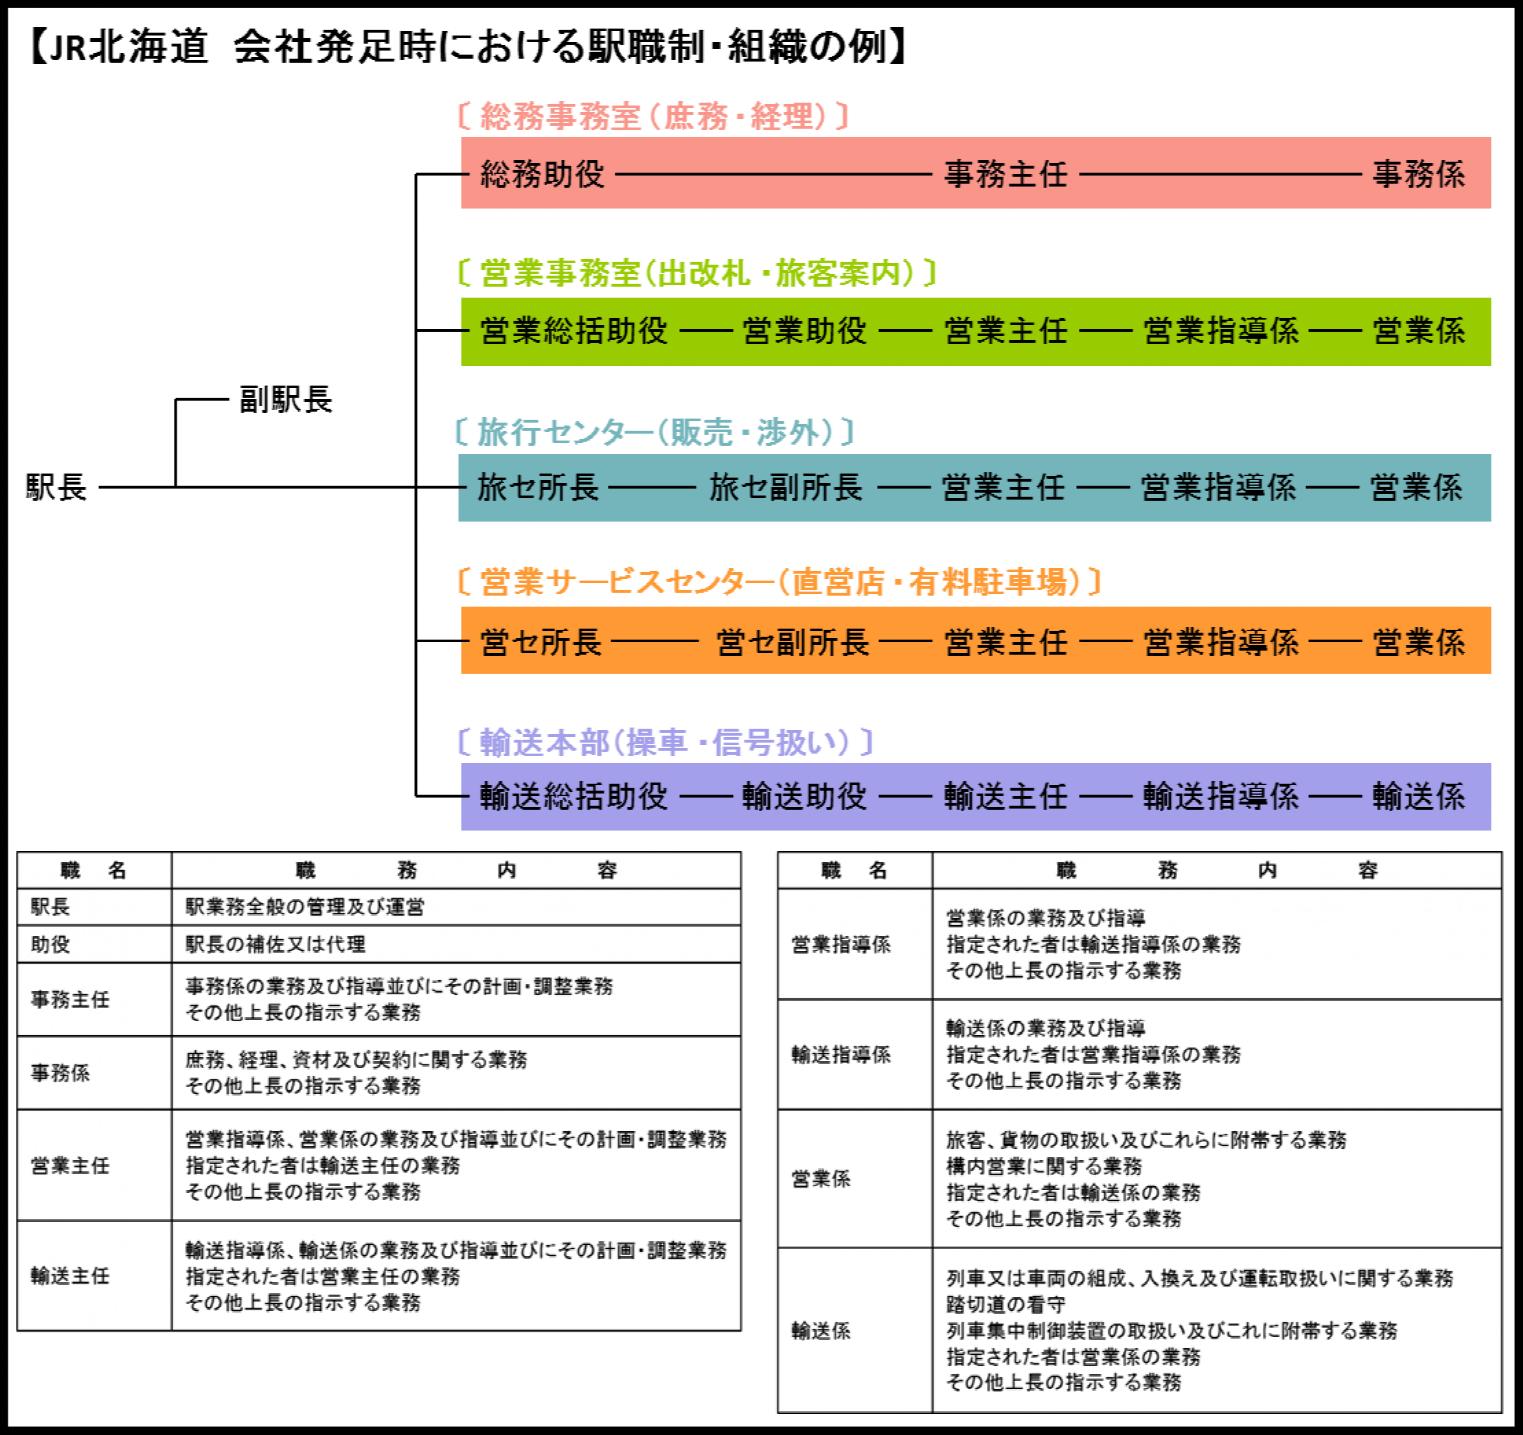 JR北海道・駅の職制・指揮命令系統イメージ図